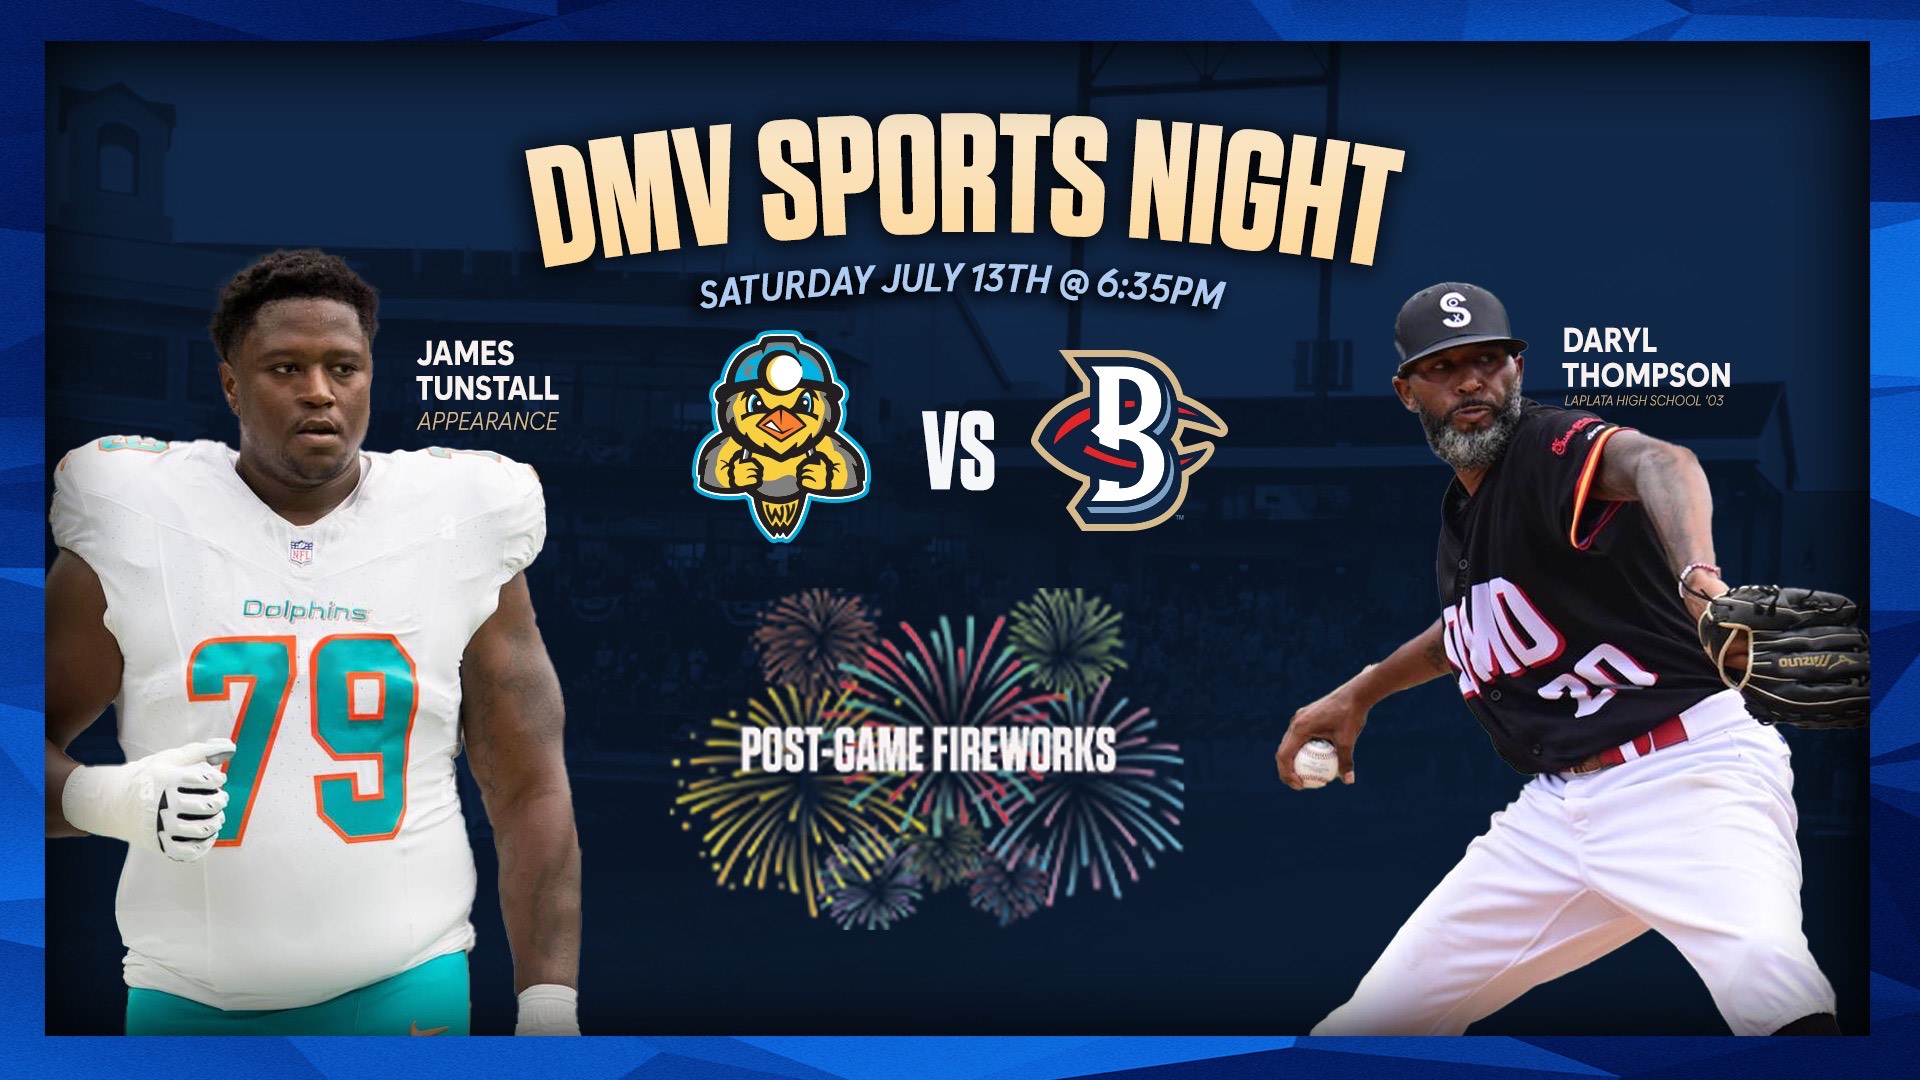 DMV Sports Night! Mat Latos Bobblehead Giveaway! Postgame Fireworks!